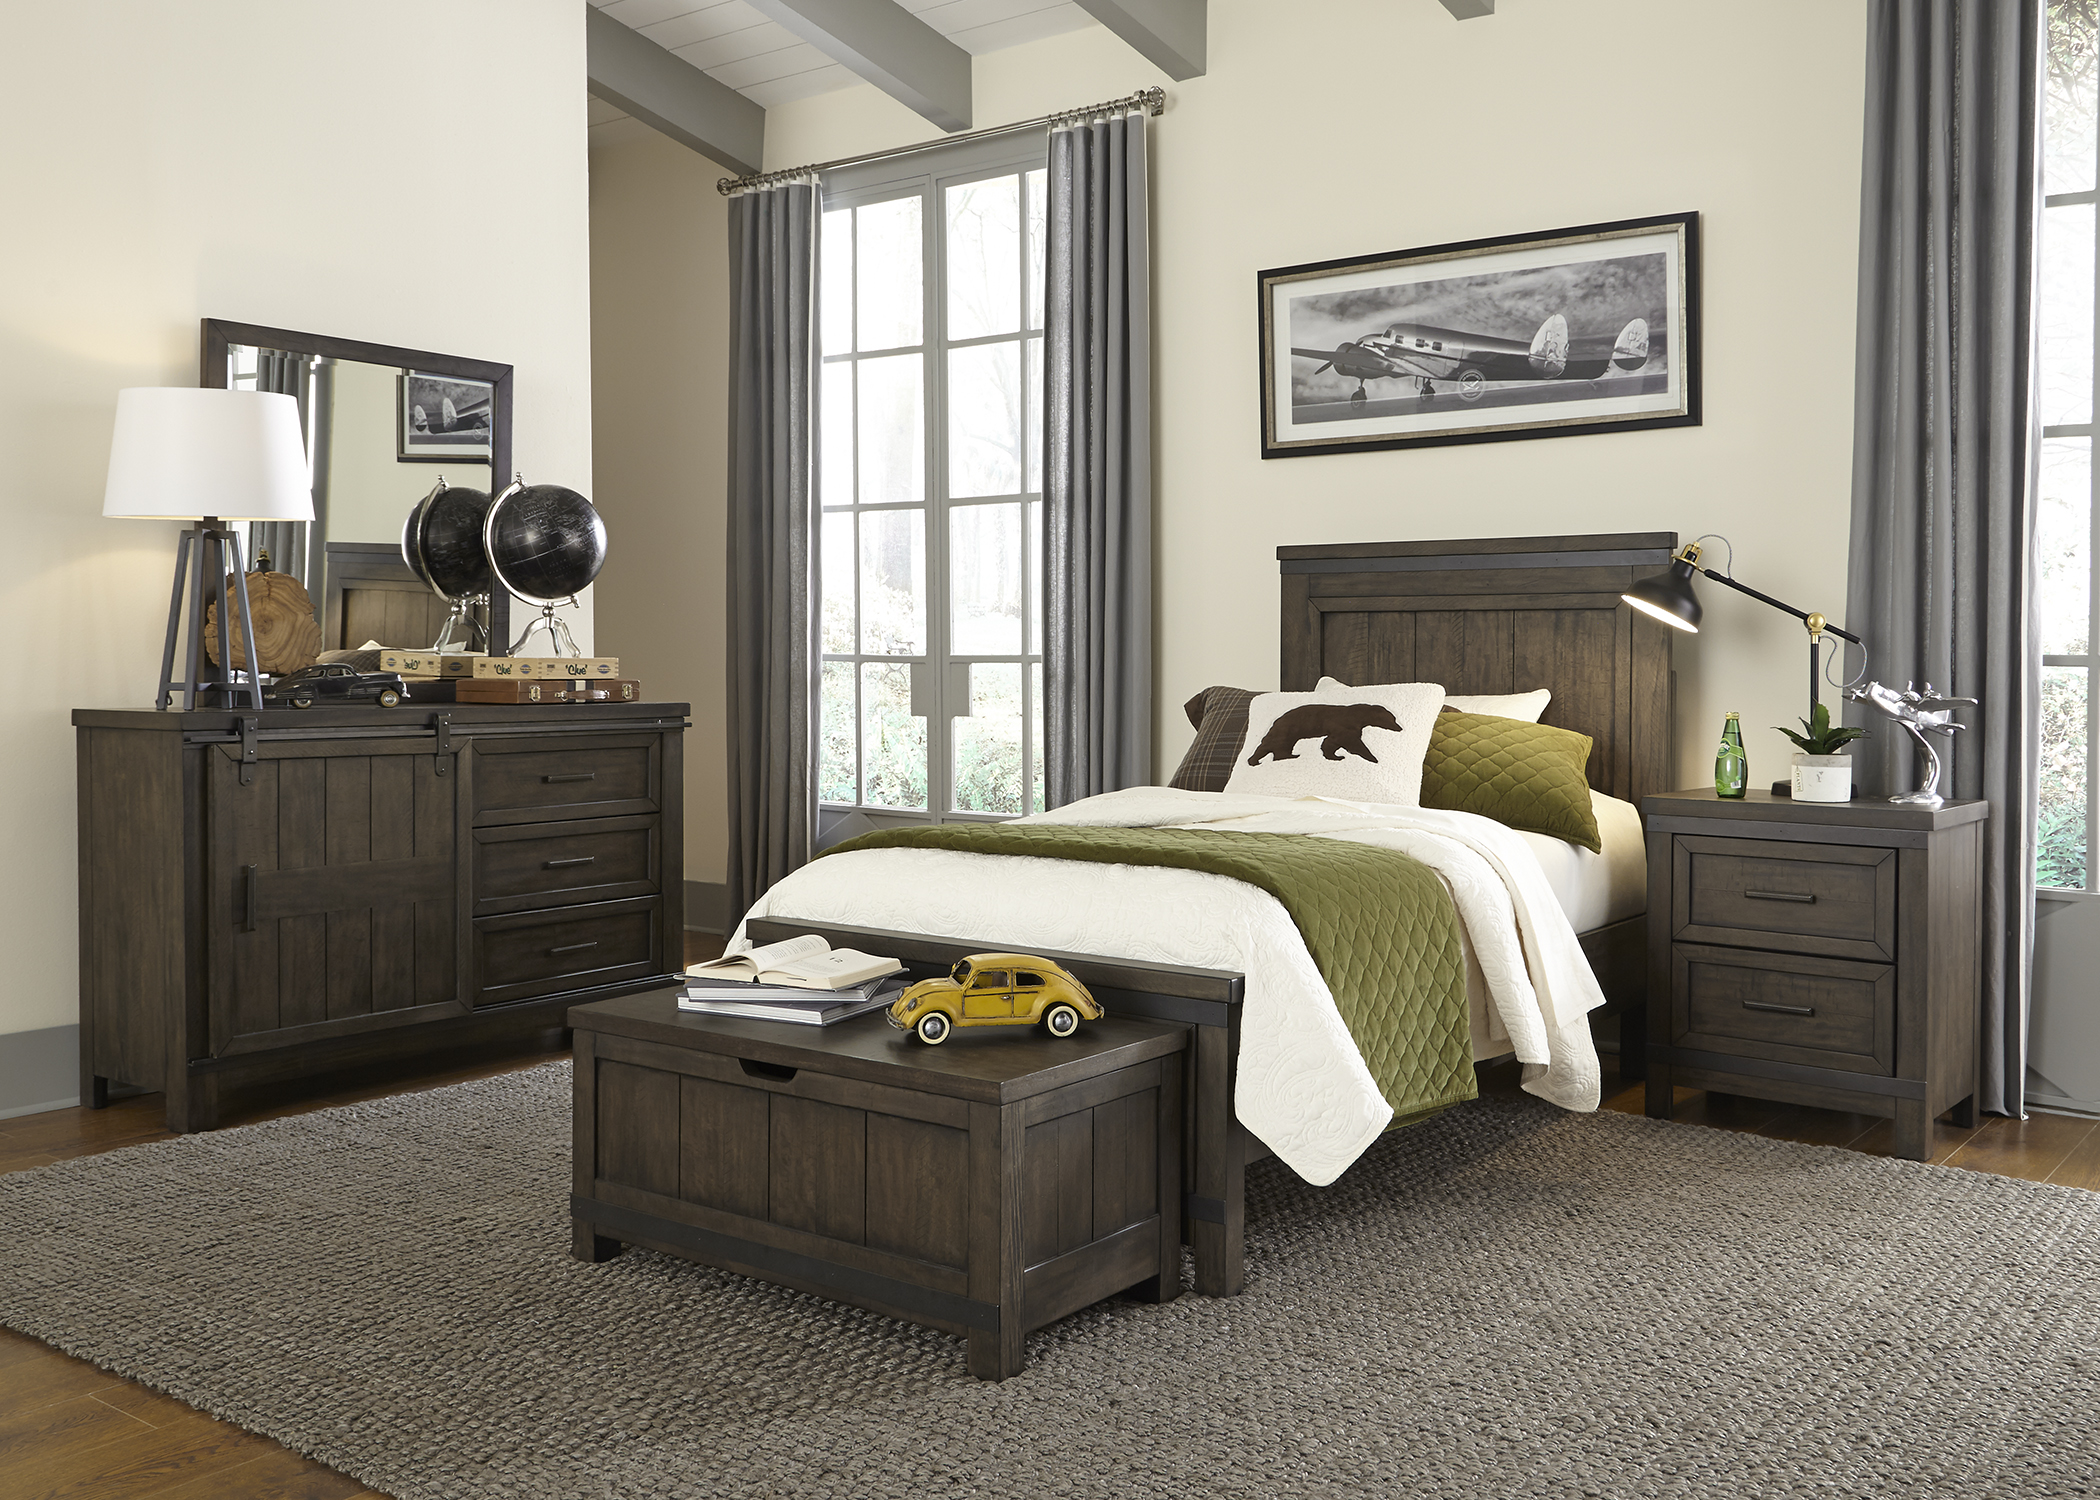 thornwood bedroom furniture prices